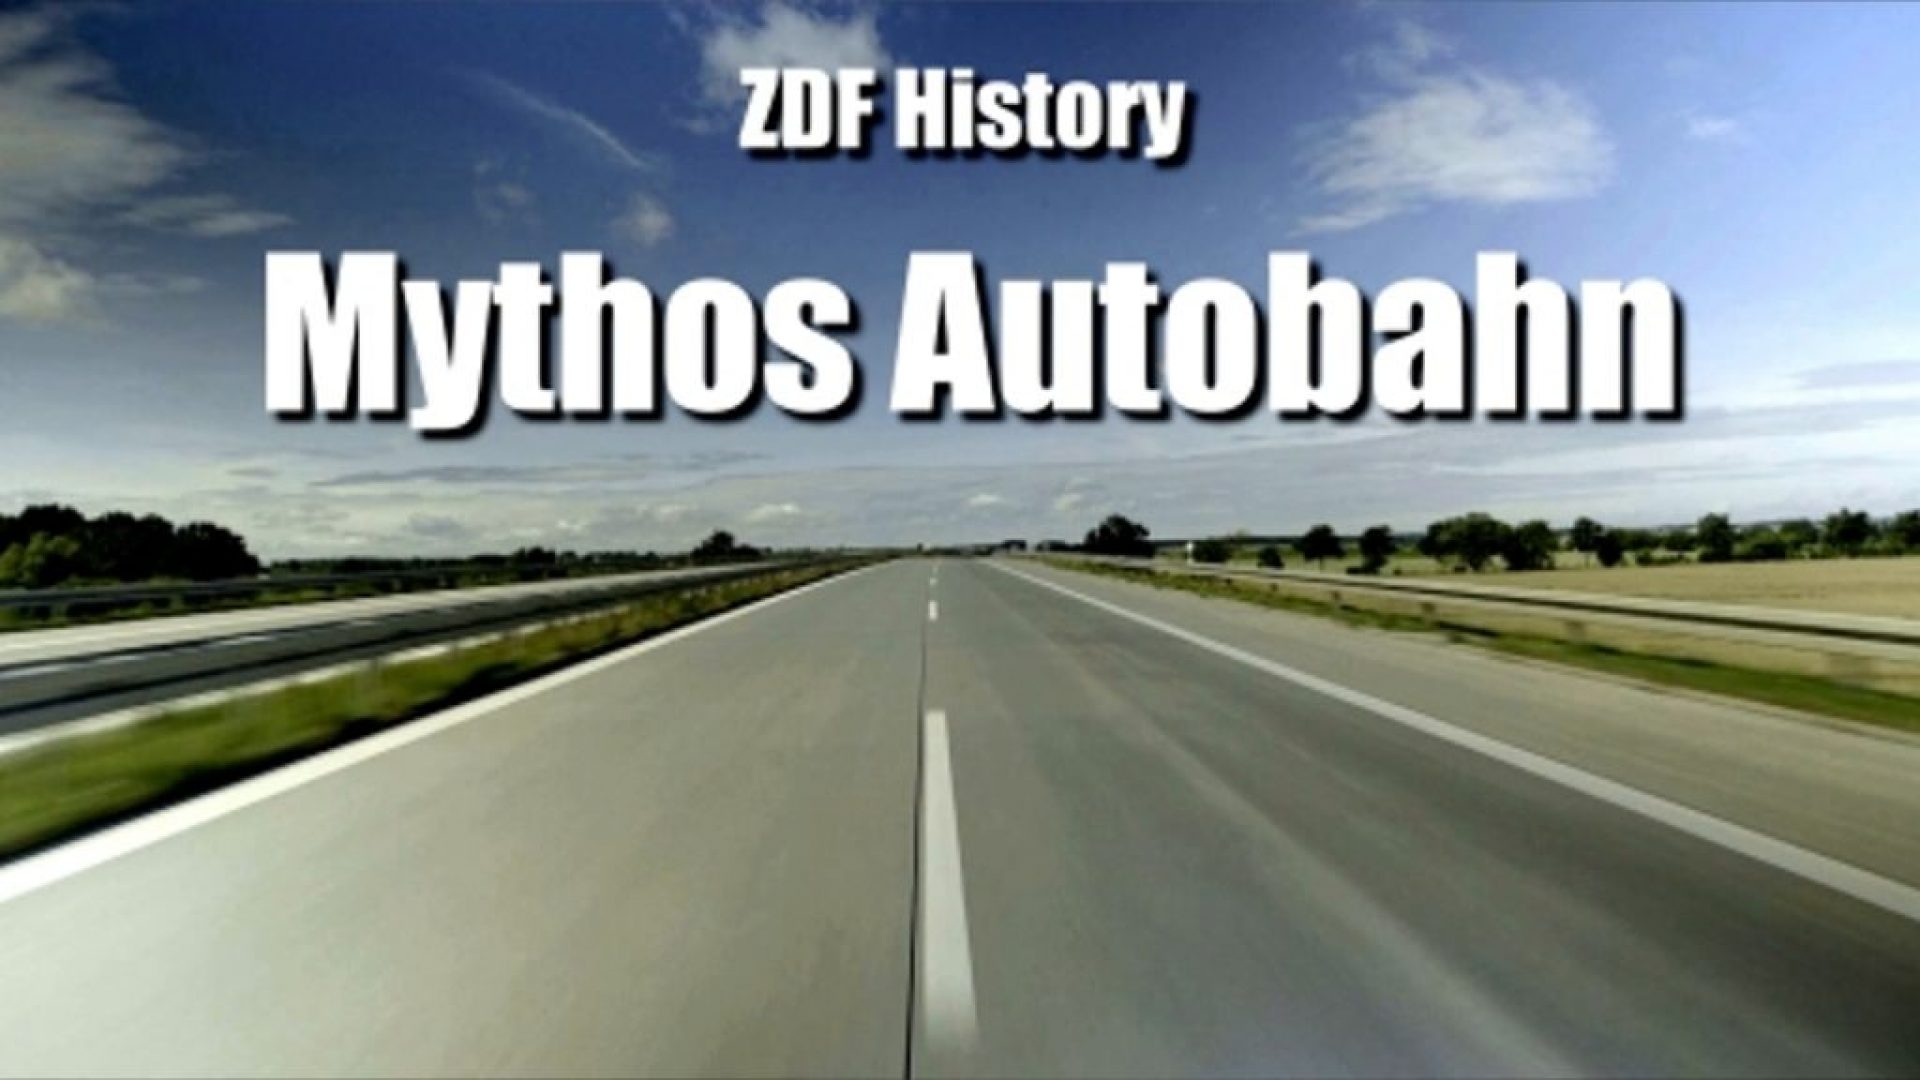 Mythos Autobahn